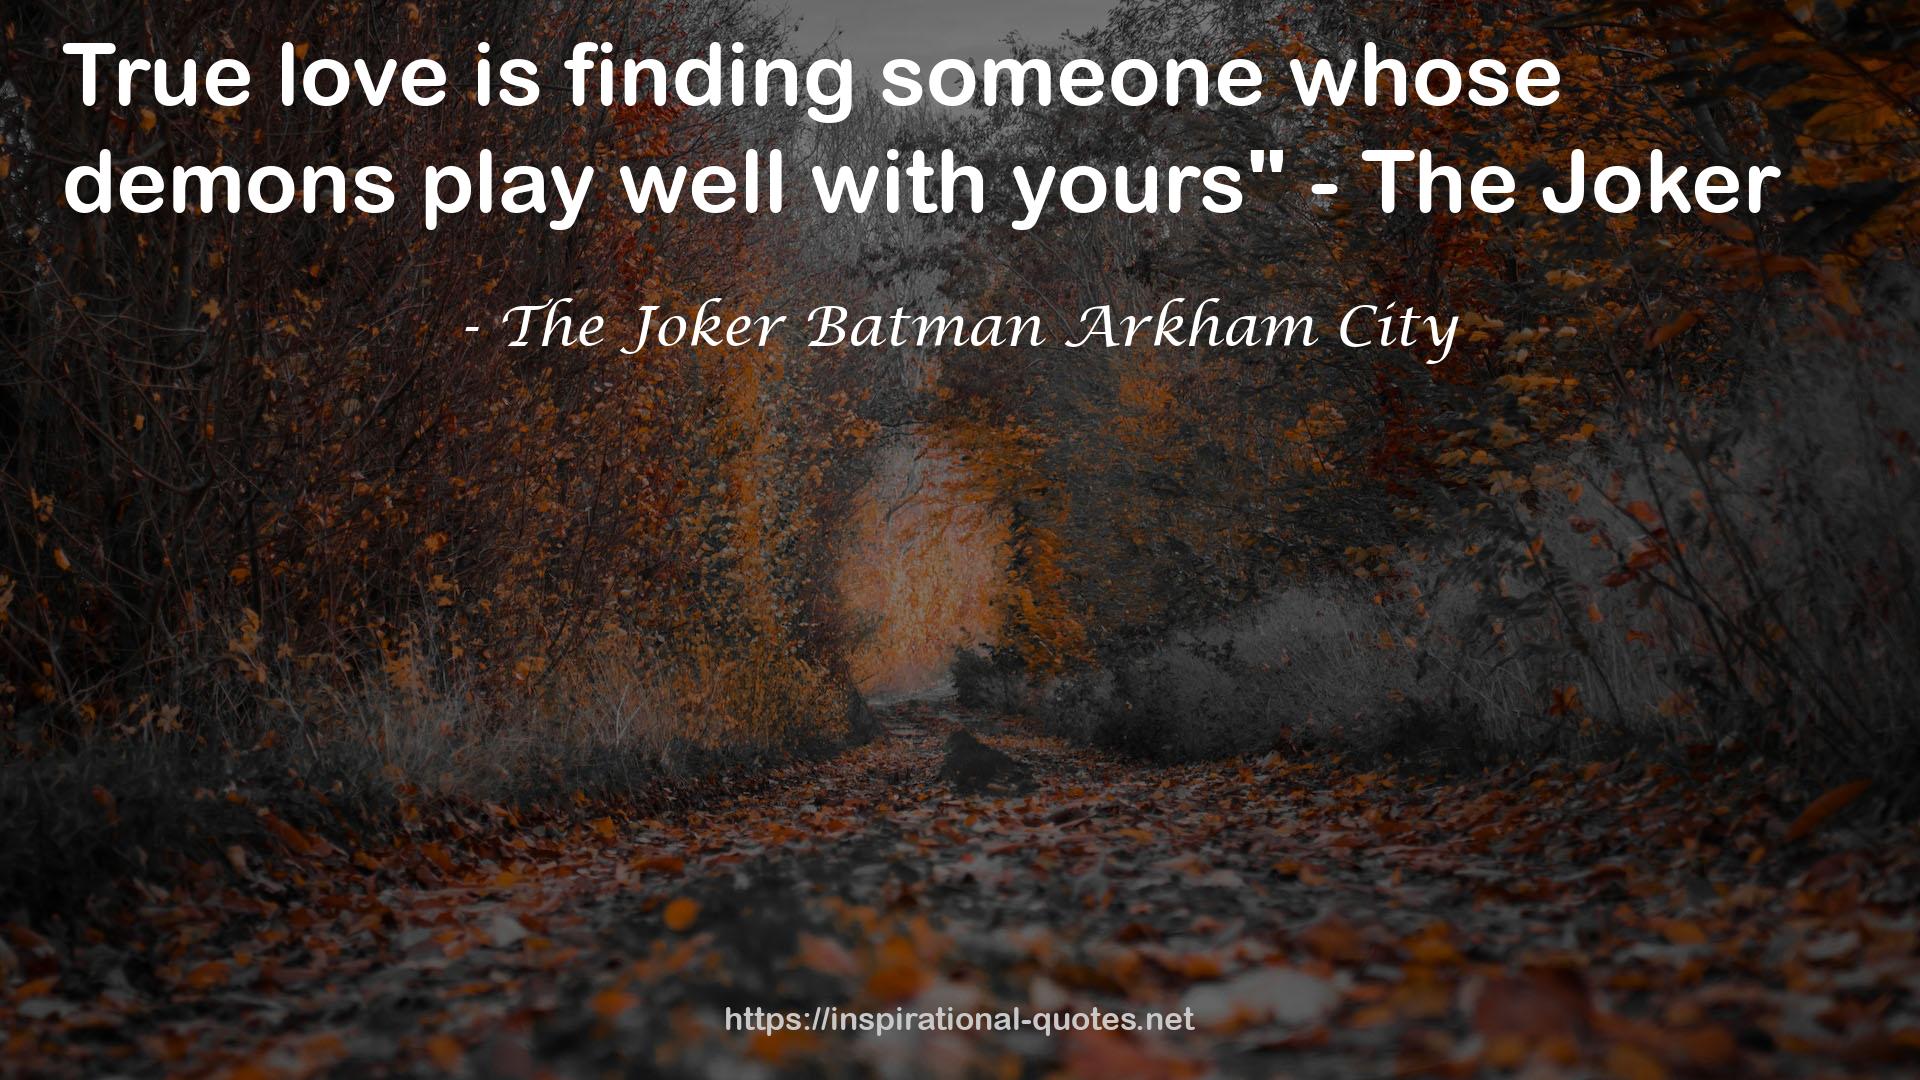 The Joker Batman Arkham City QUOTES